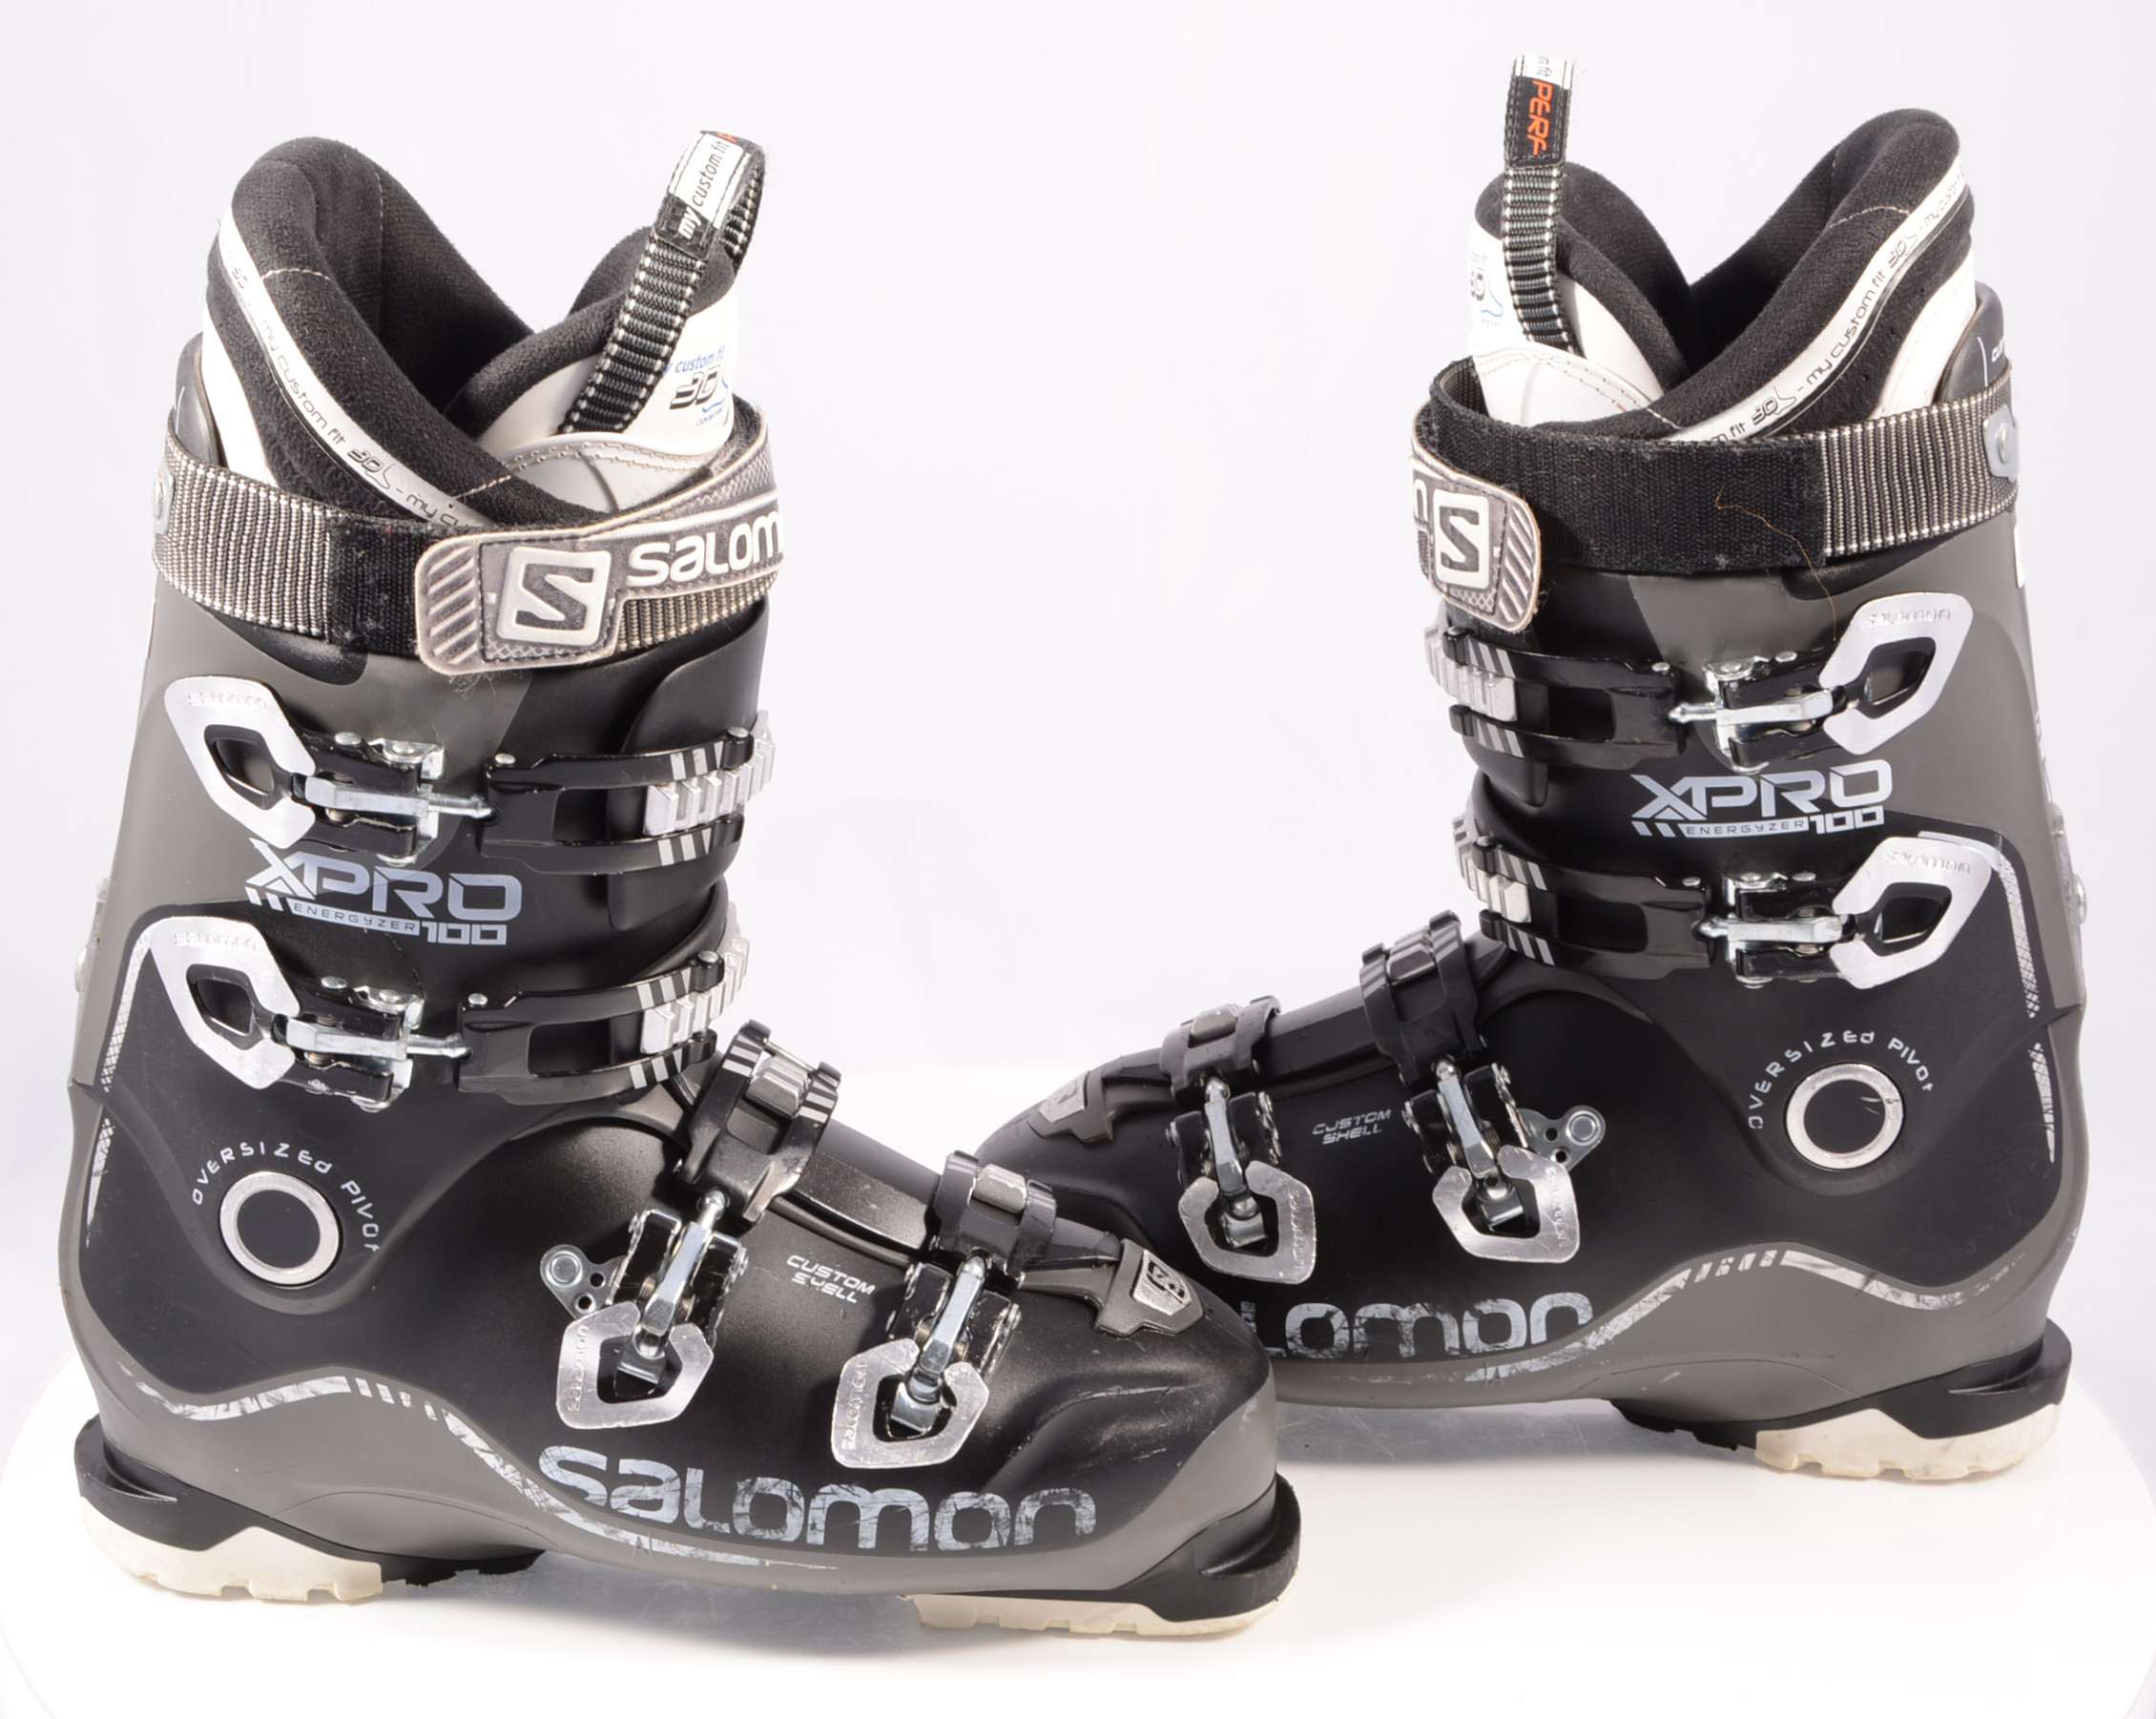 ski boots SALOMON X PRO 100, OVERSIZED pivot, CUSTOM shell, MY